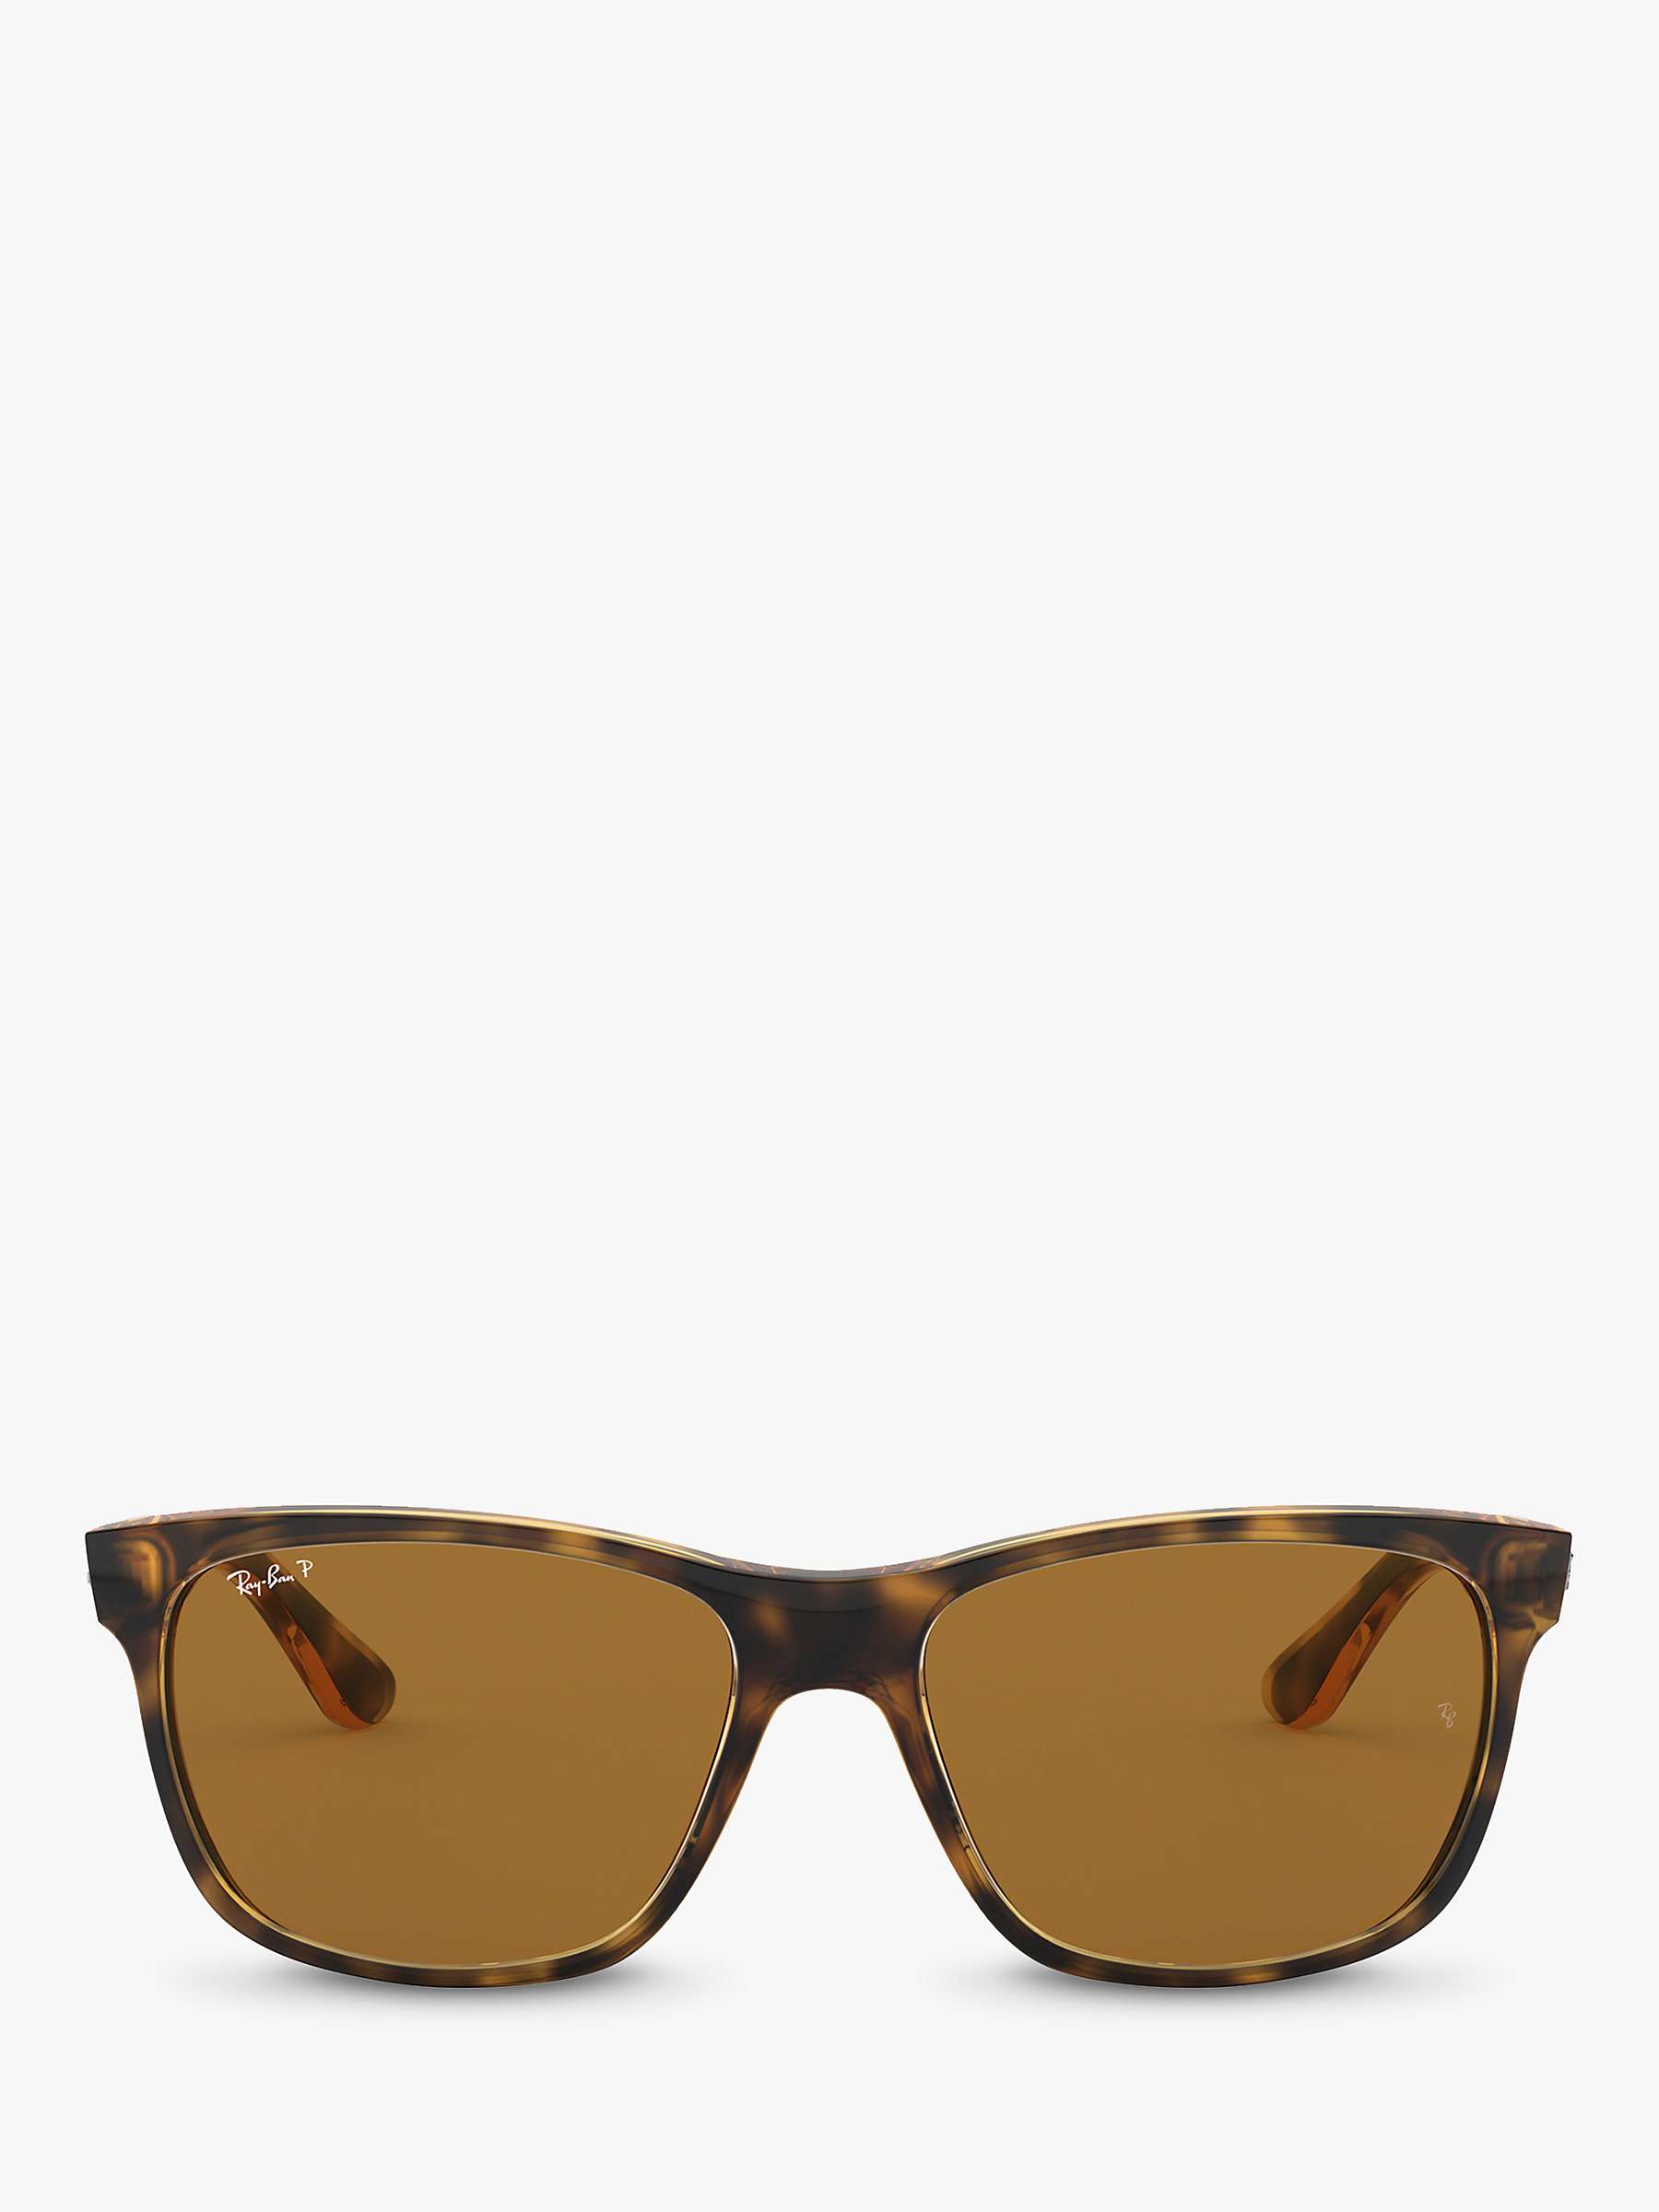 Buy Ray-Ban RB4181 Sunglasses, Havana Brown Online at johnlewis.com